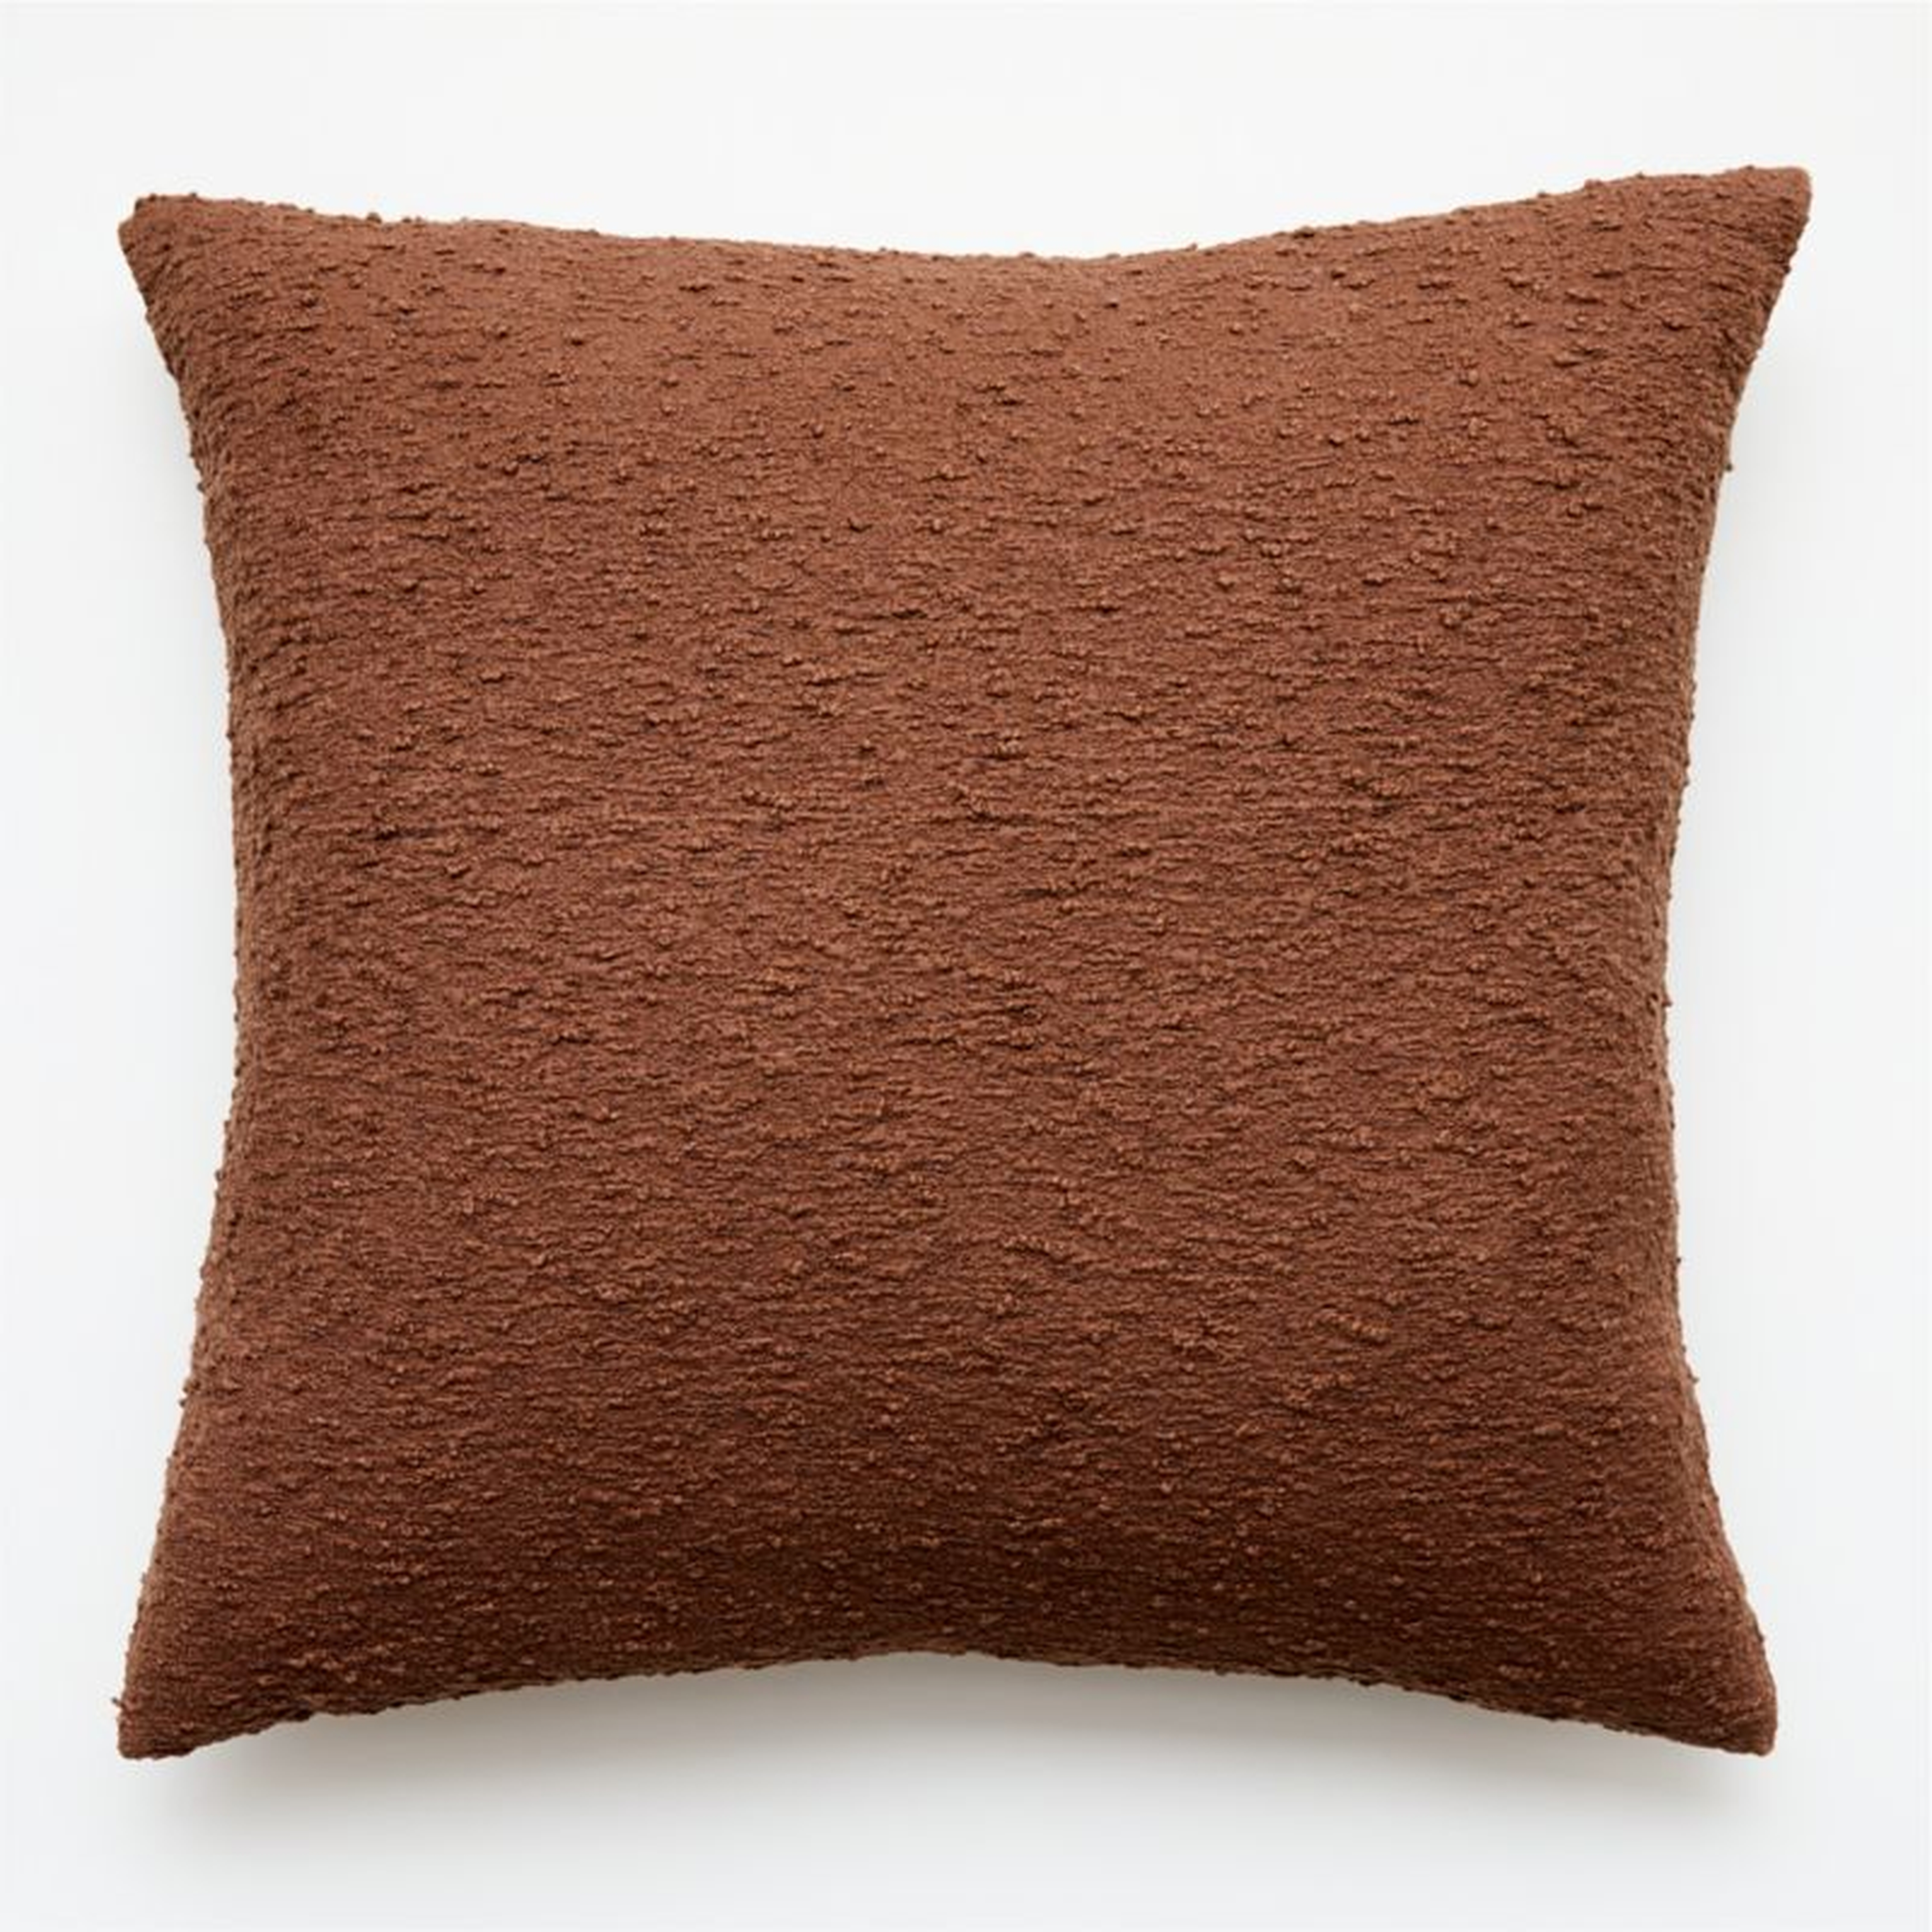 Boucle Pillow with Down-Alternative Insert, Mocha, 23" x 23" - CB2